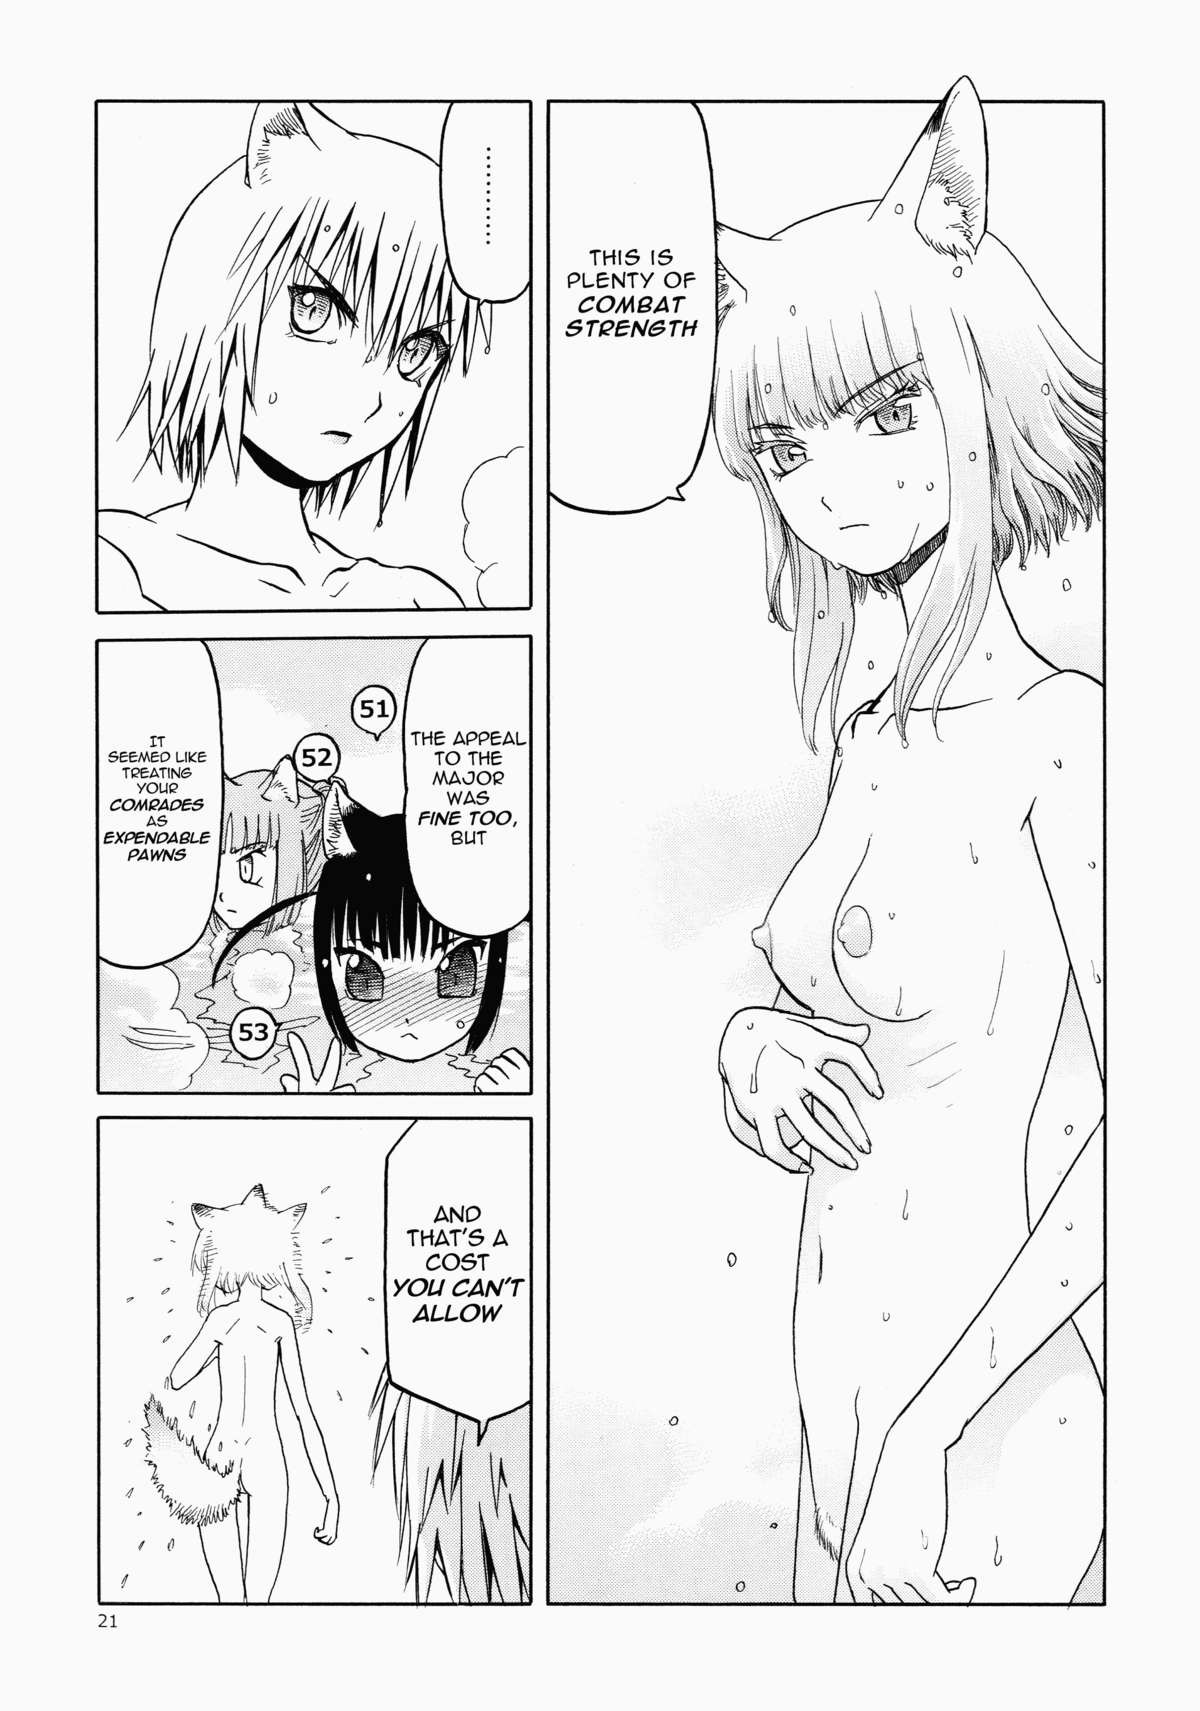 View Upotte Porn Comics Hentai Online Porn Manga And Doujinshi 1 Hentai Comics